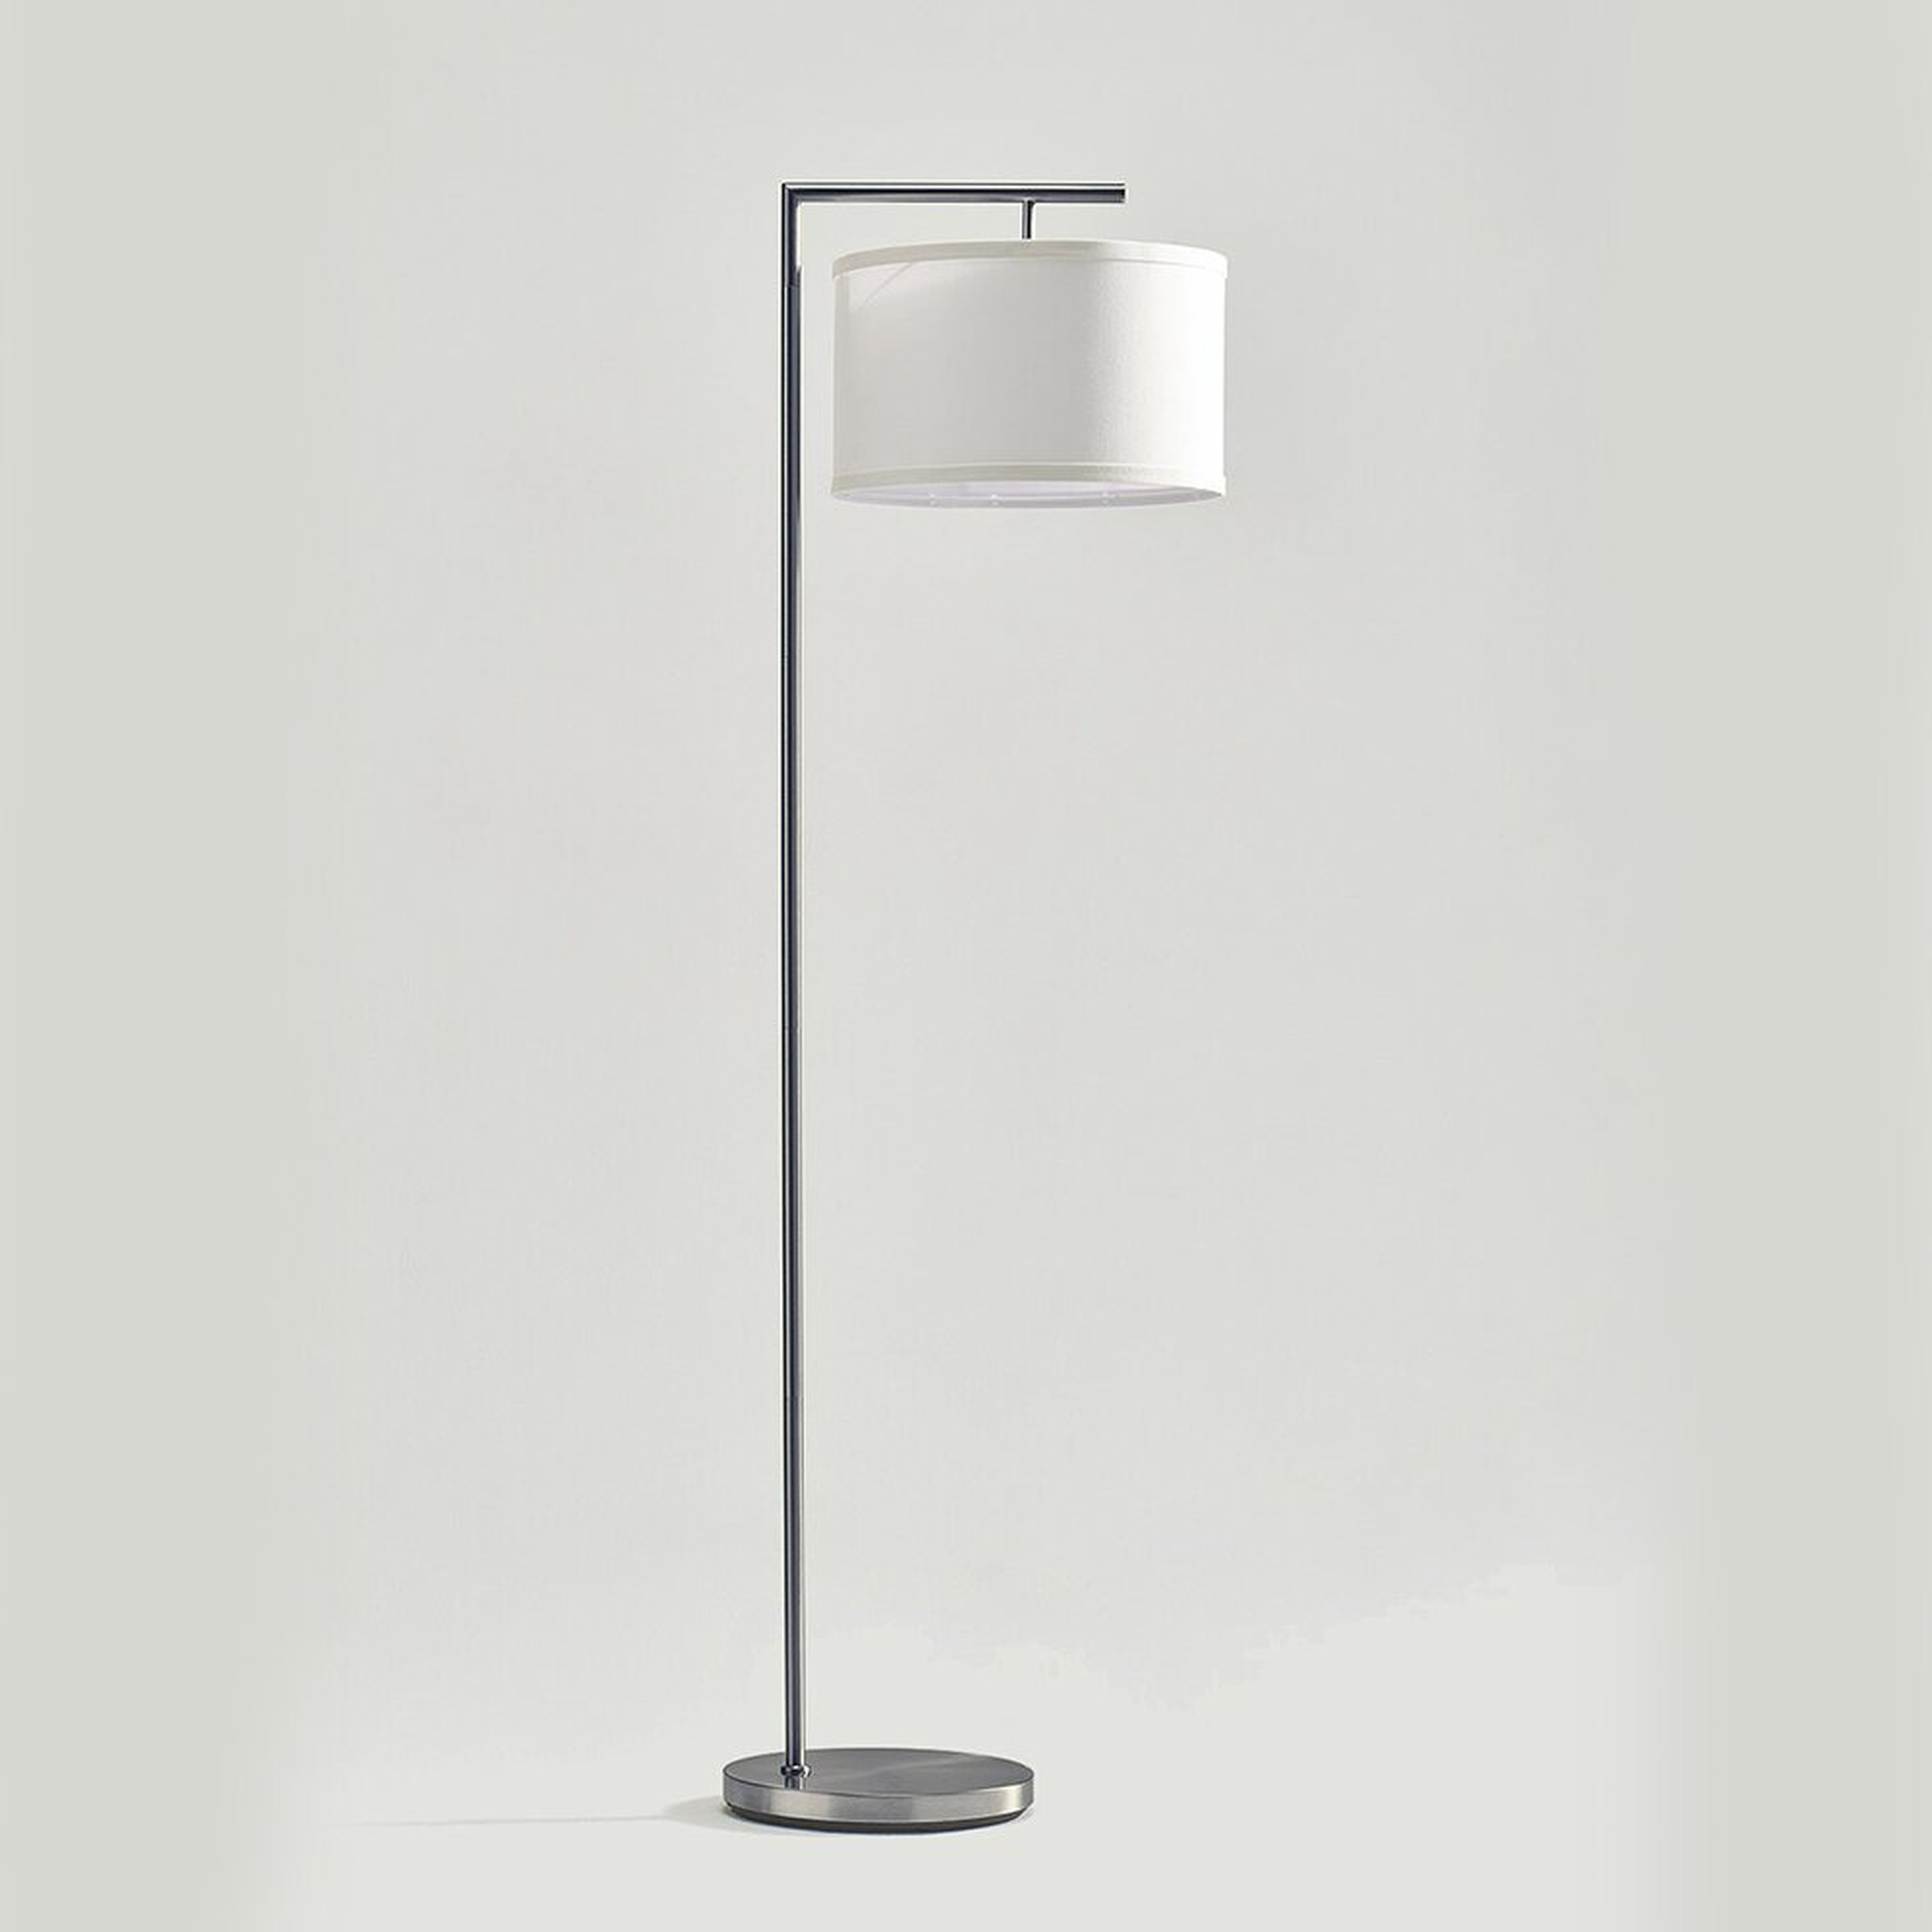 Brightech Montage Modern Standing Floor Smart Lamp With LED Light, Satin Nickel - Wayfair